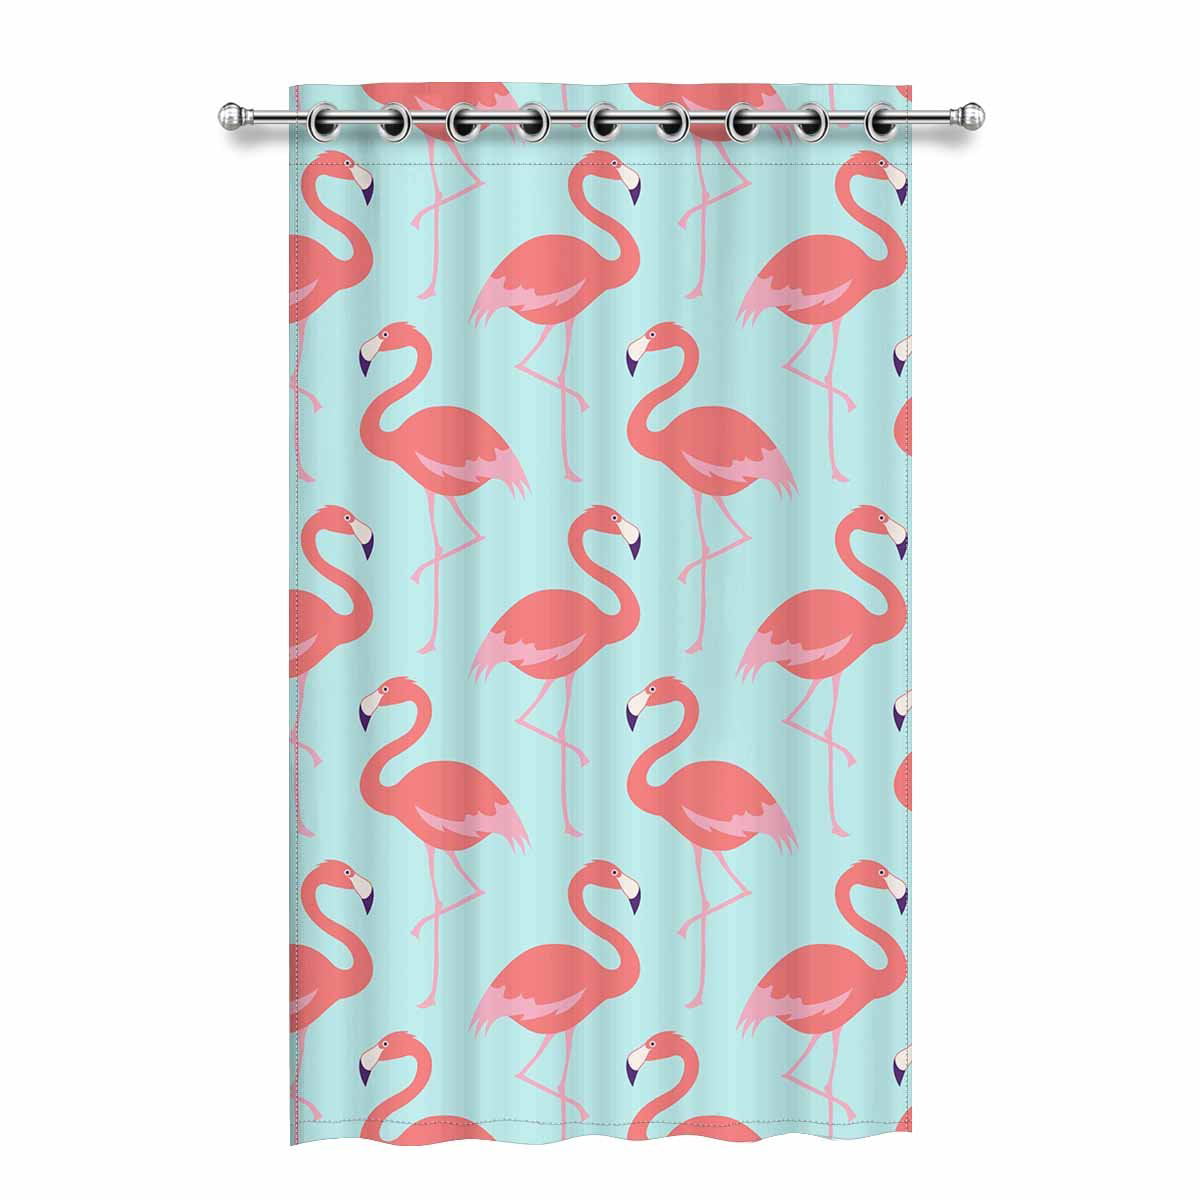 MKHERT Flamingo Bird Blackout Window Curtain Drapes Bedroom Living